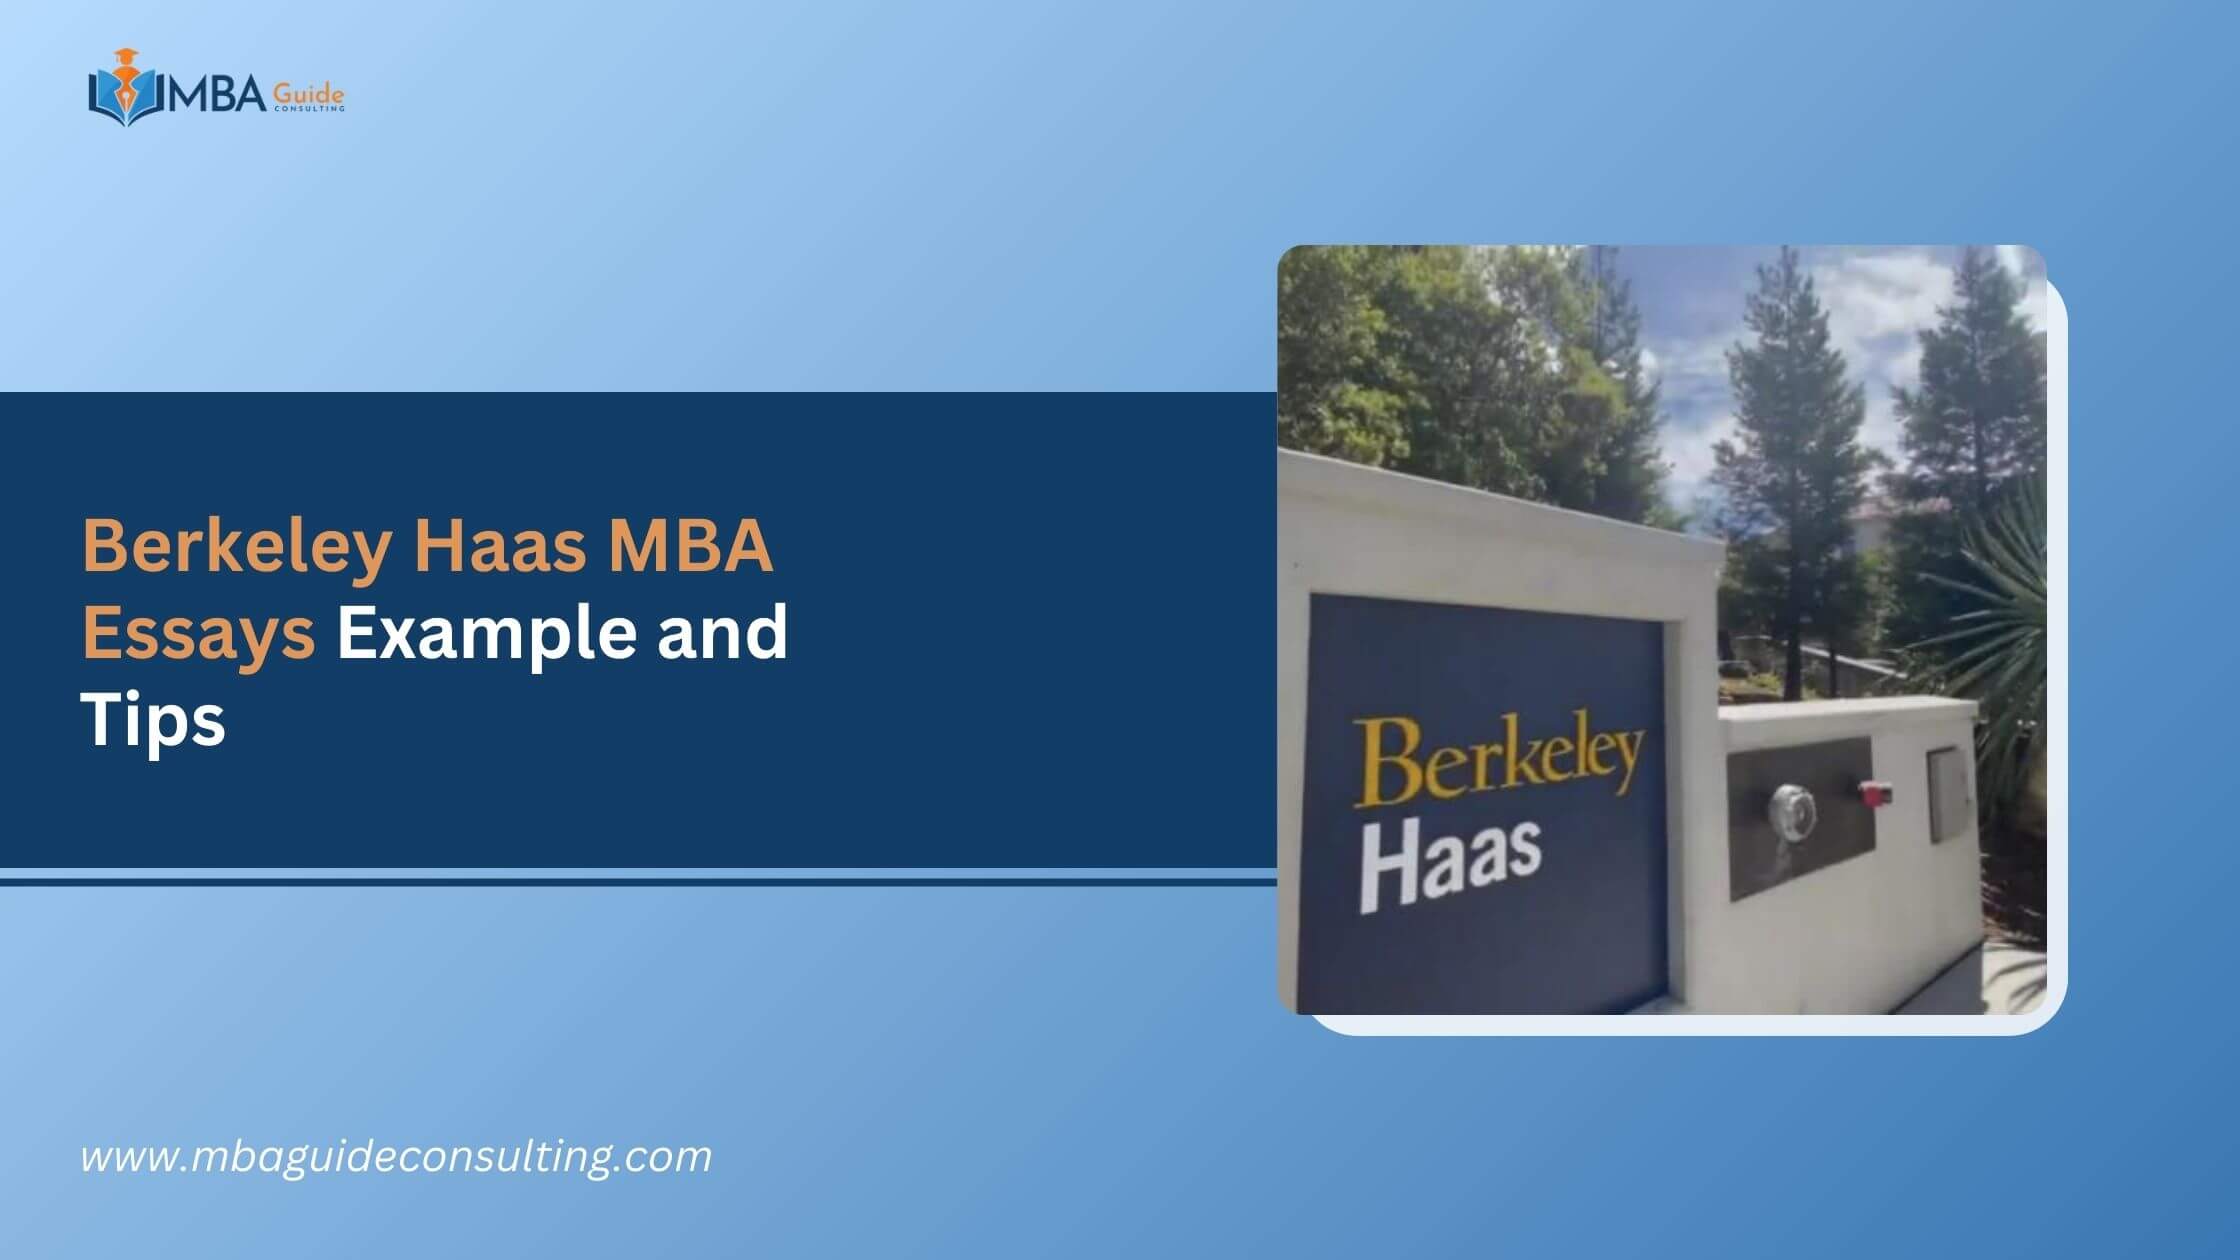 Berkeley Haas MBA Essays Example and Tips (1)